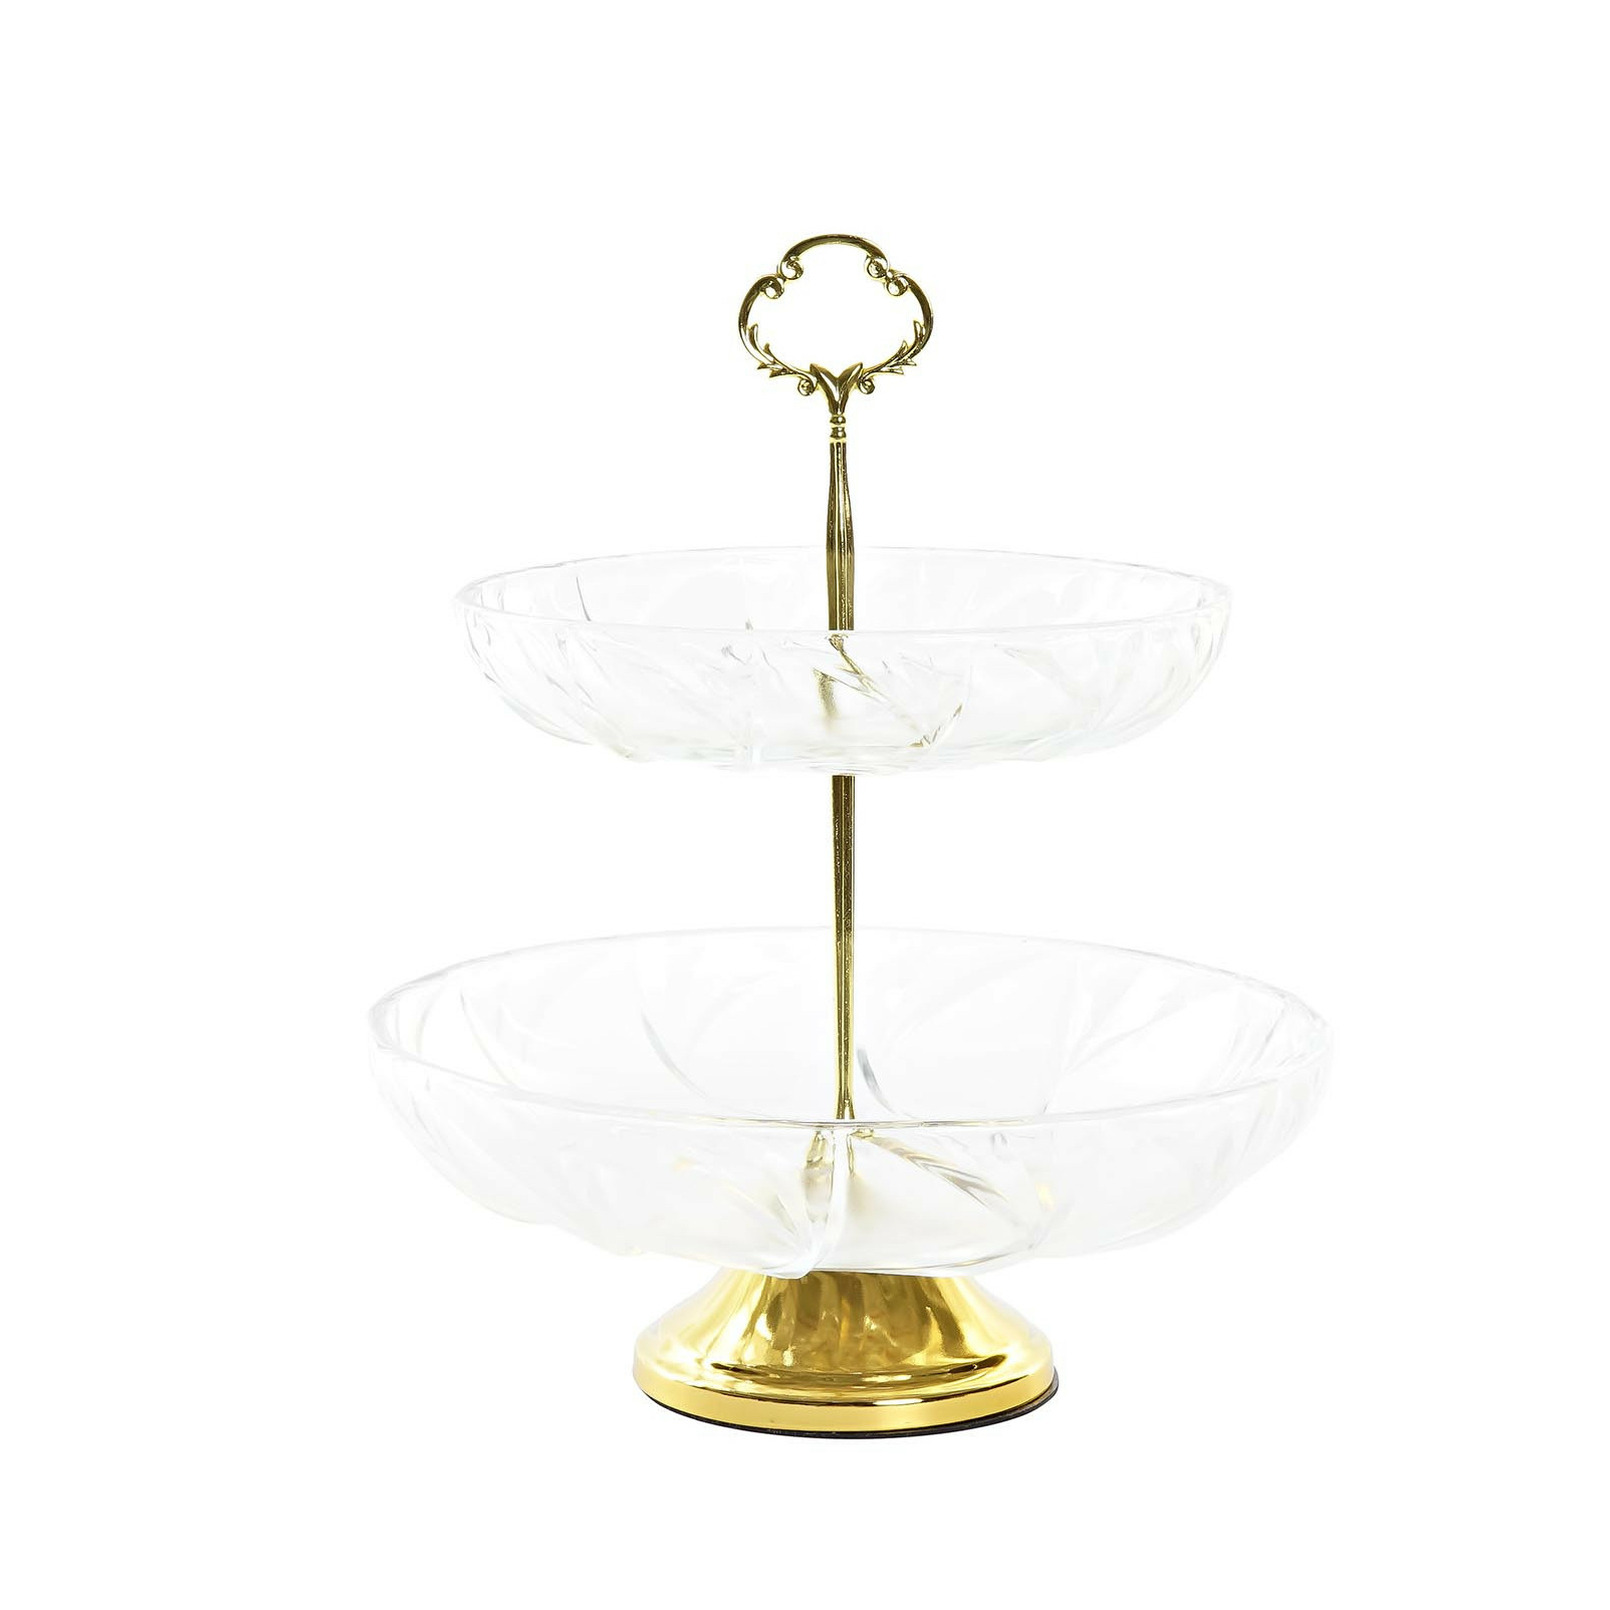 Items Design fruitschaal - goud/transparant - 2 laags etagiere - metaal/glas - 25 x 29 cm Top Merken Winkel